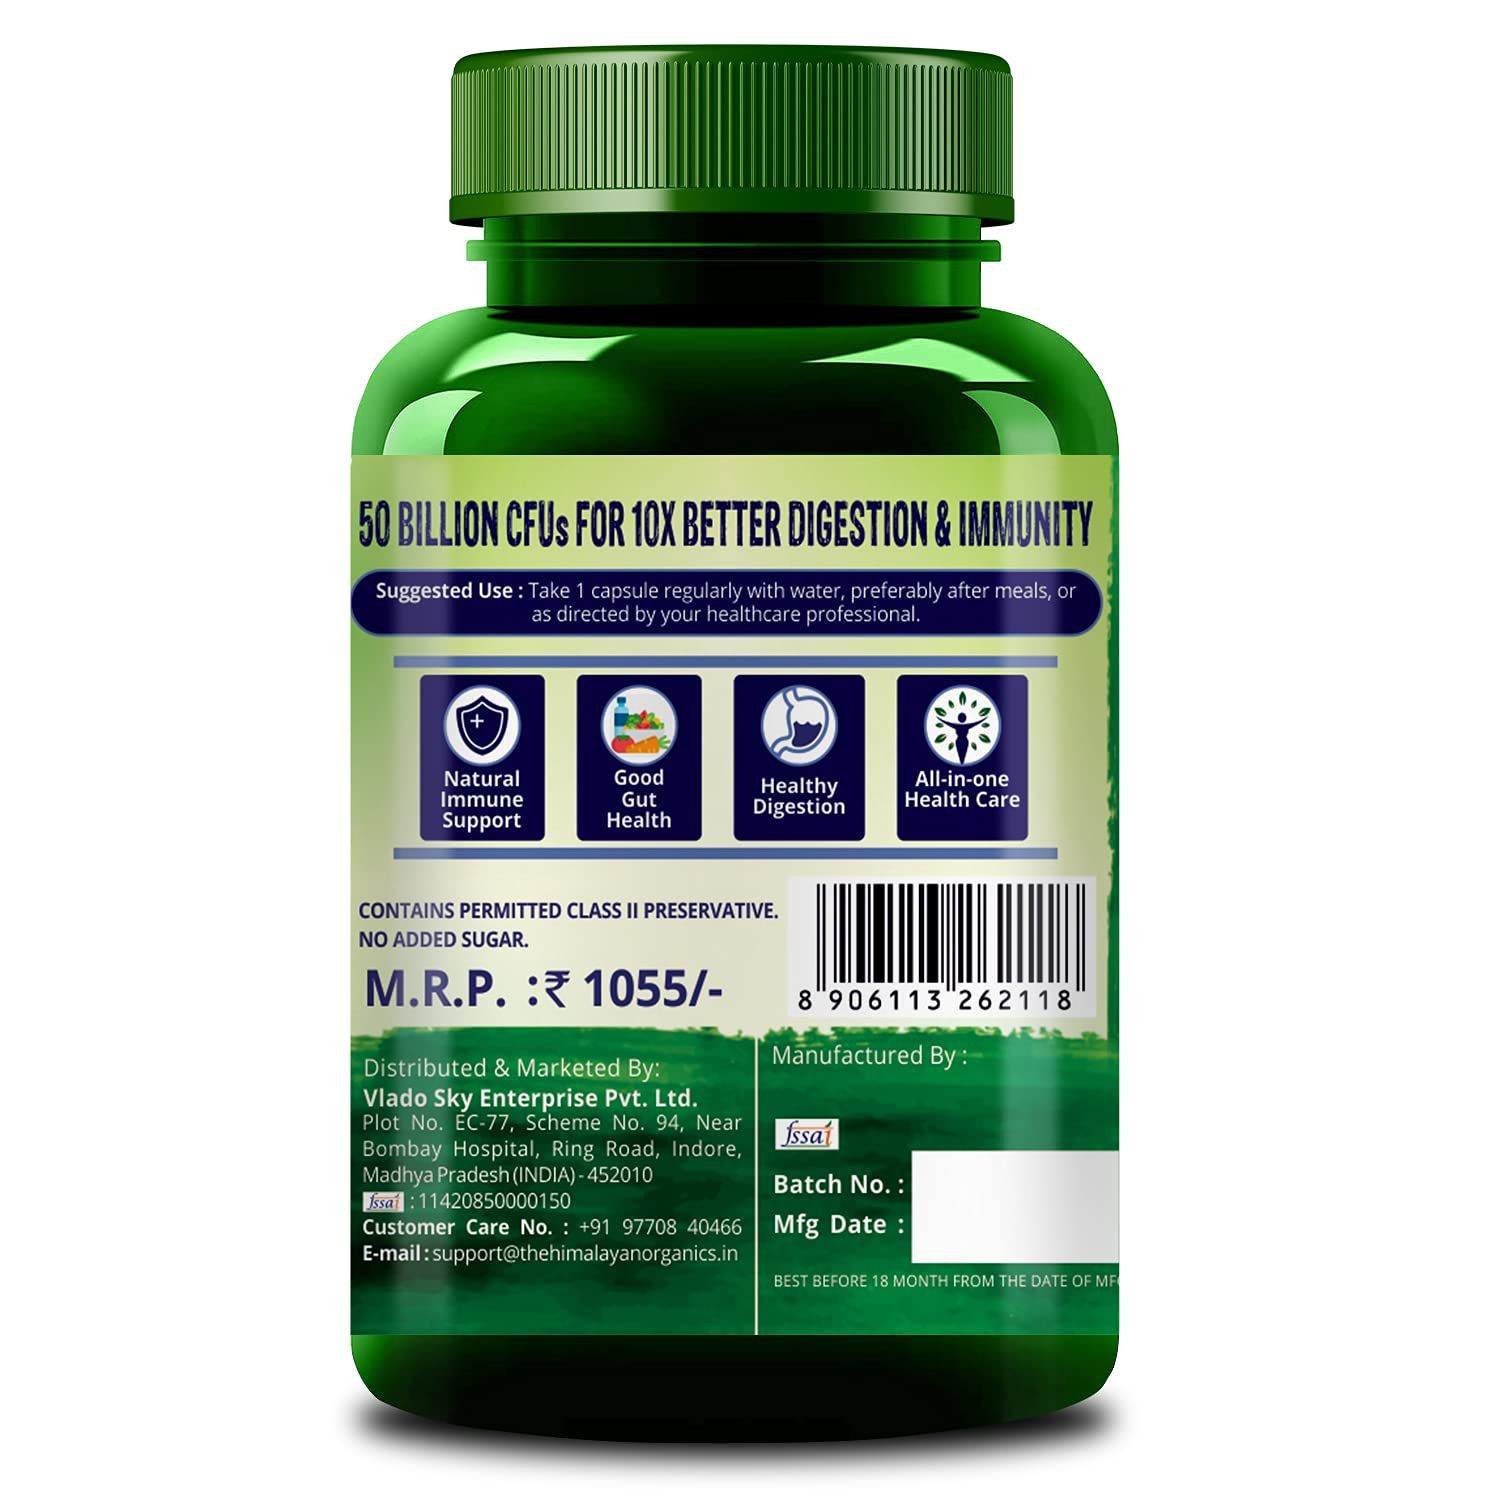 Himalayan Organics Probiotics Supplement 50 Billion CFU Capsule Image